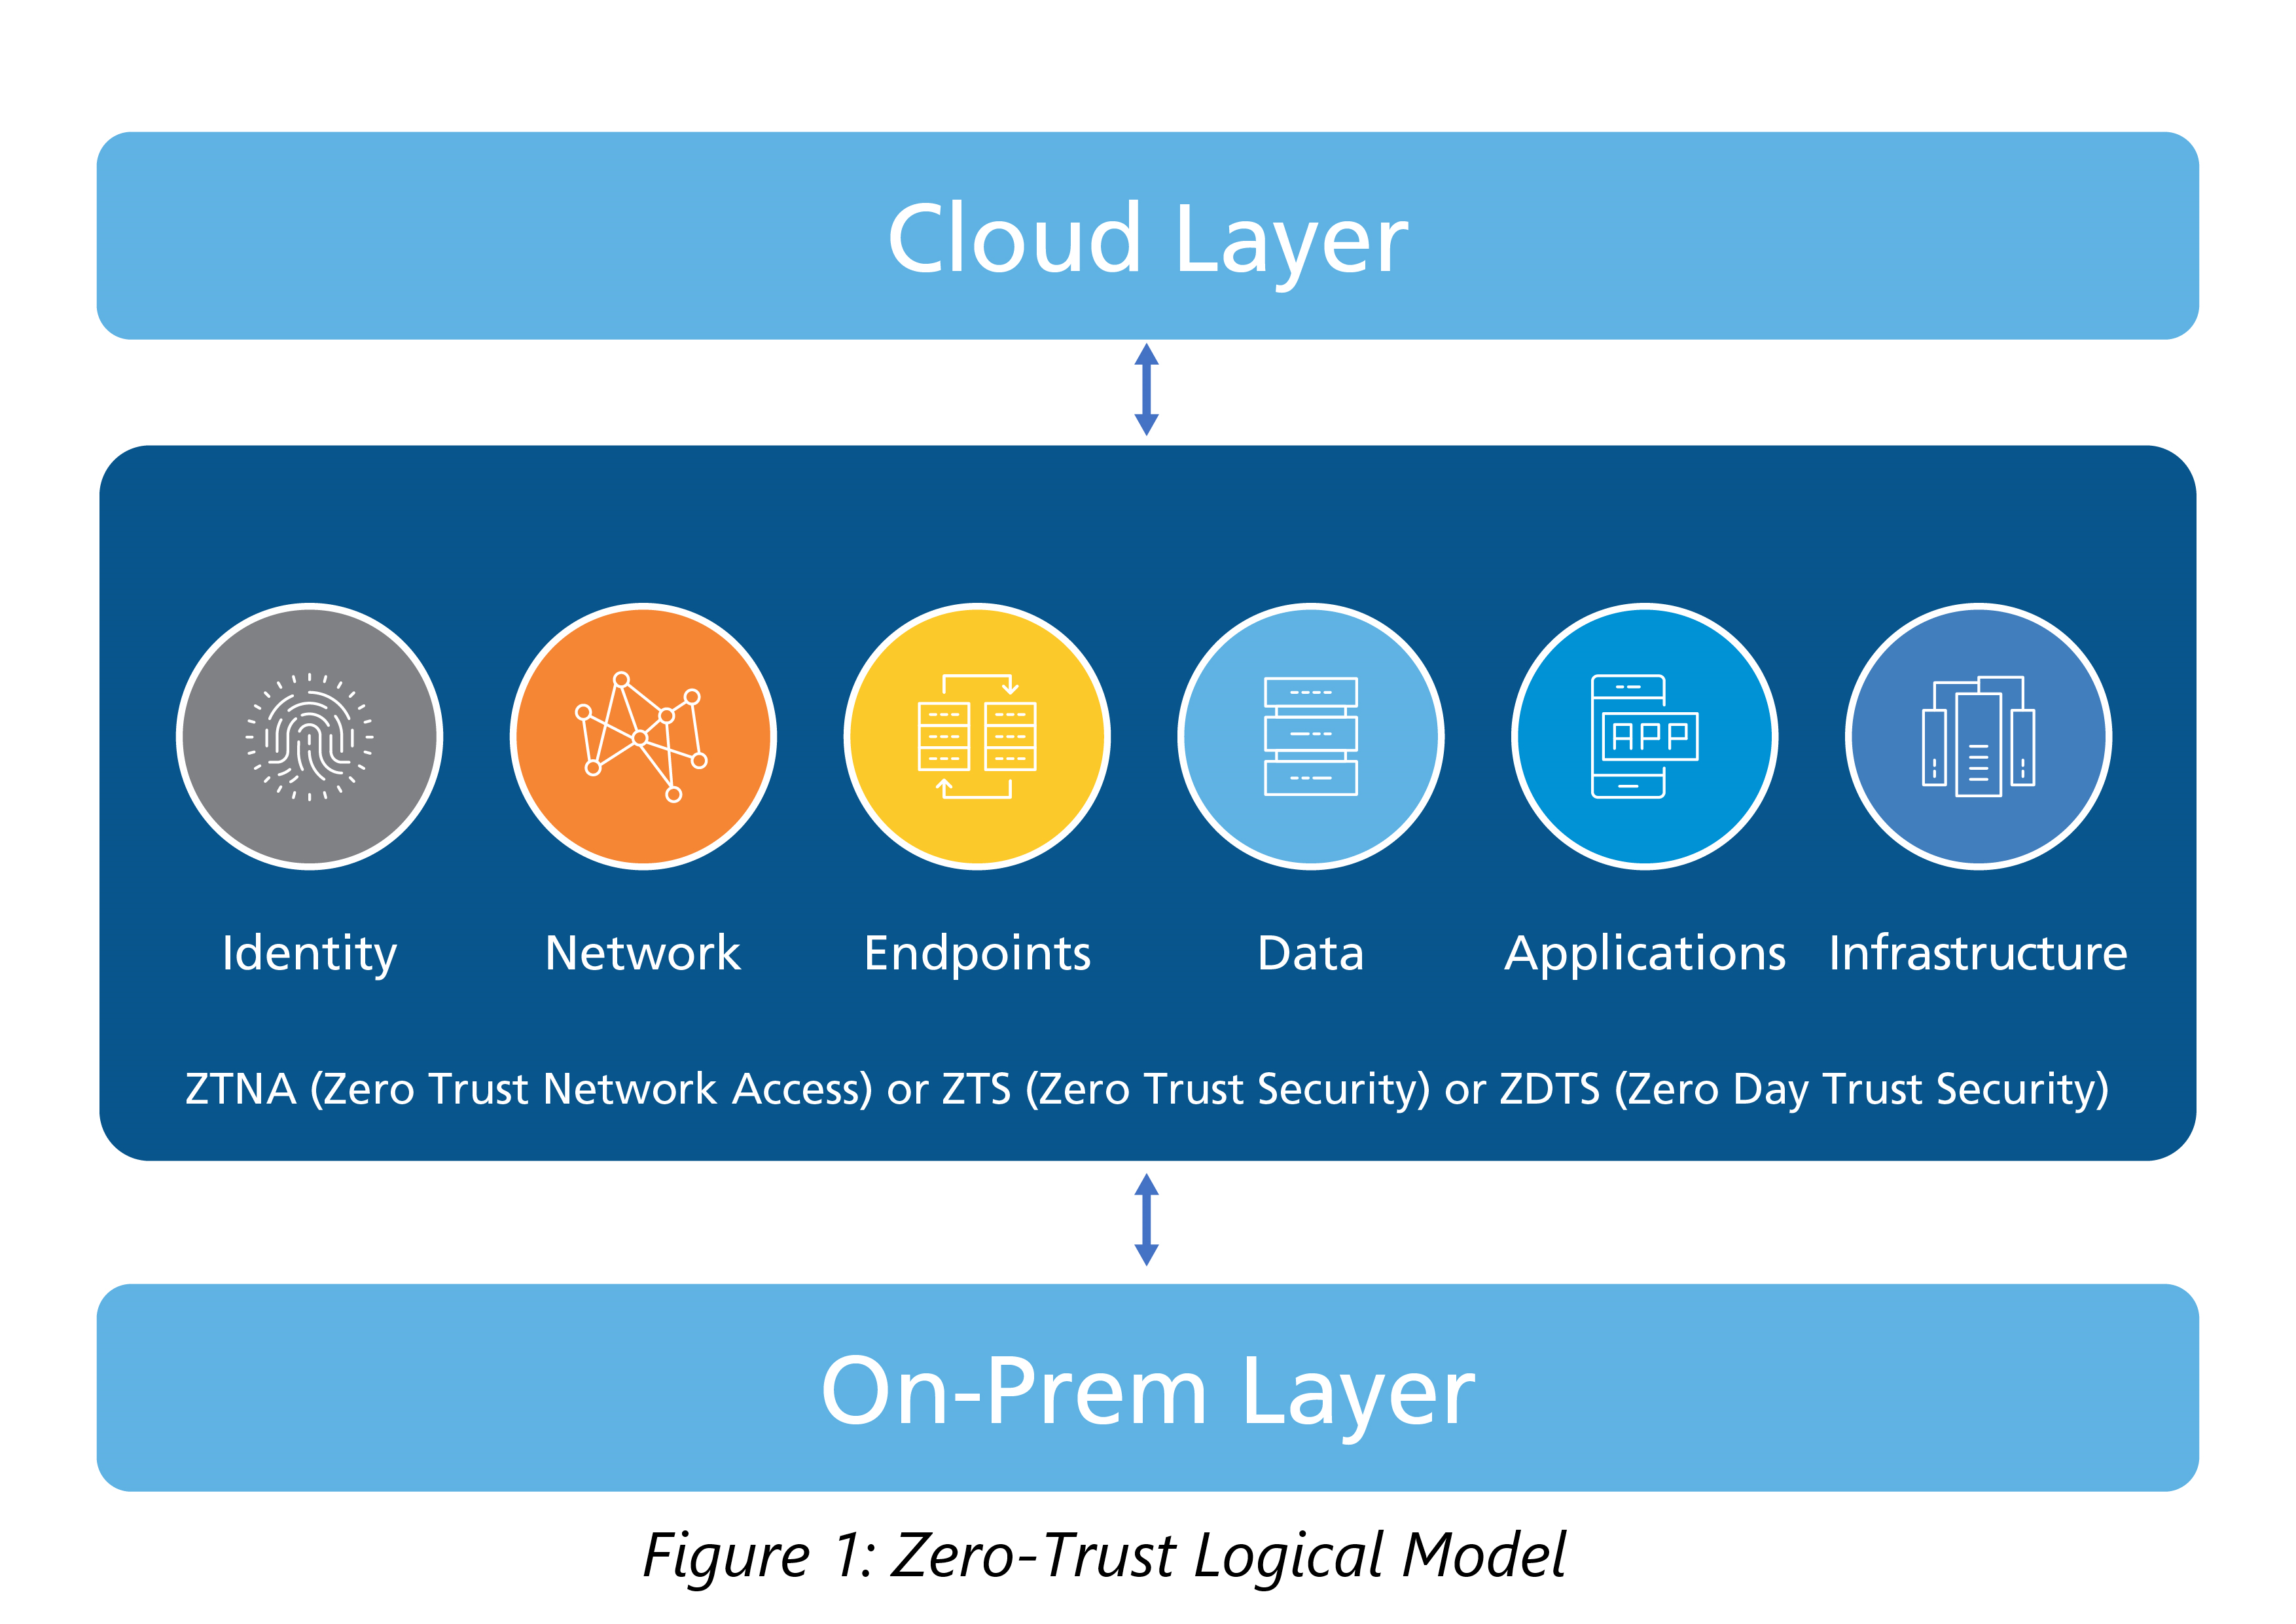 Zero-trust logical model